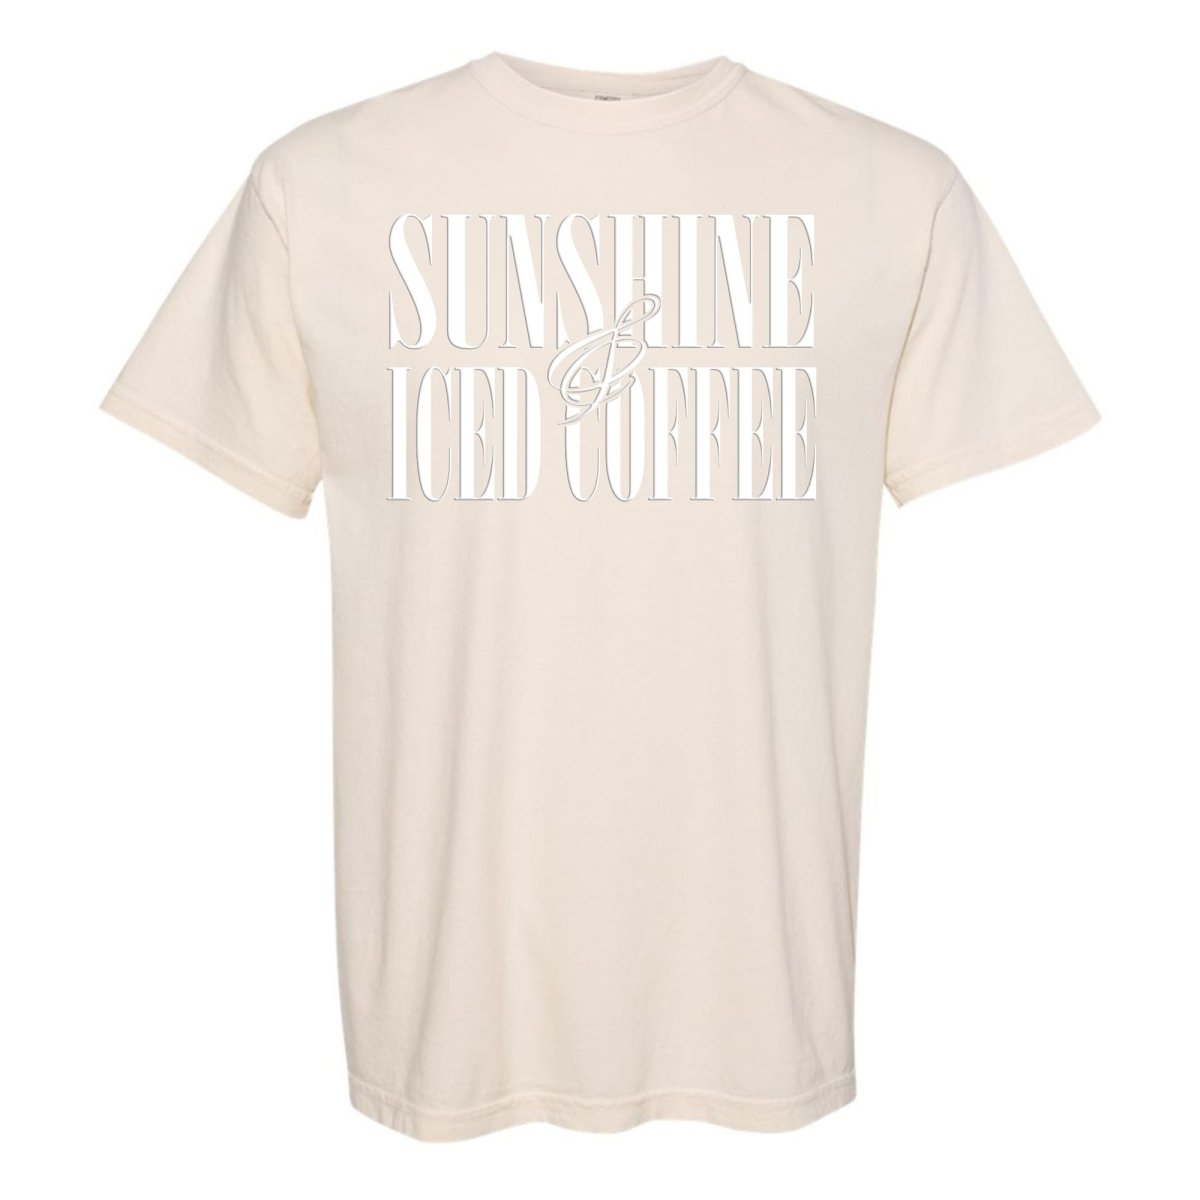 'Sunshine & Iced Coffee' PUFF T-Shirt - United Monograms